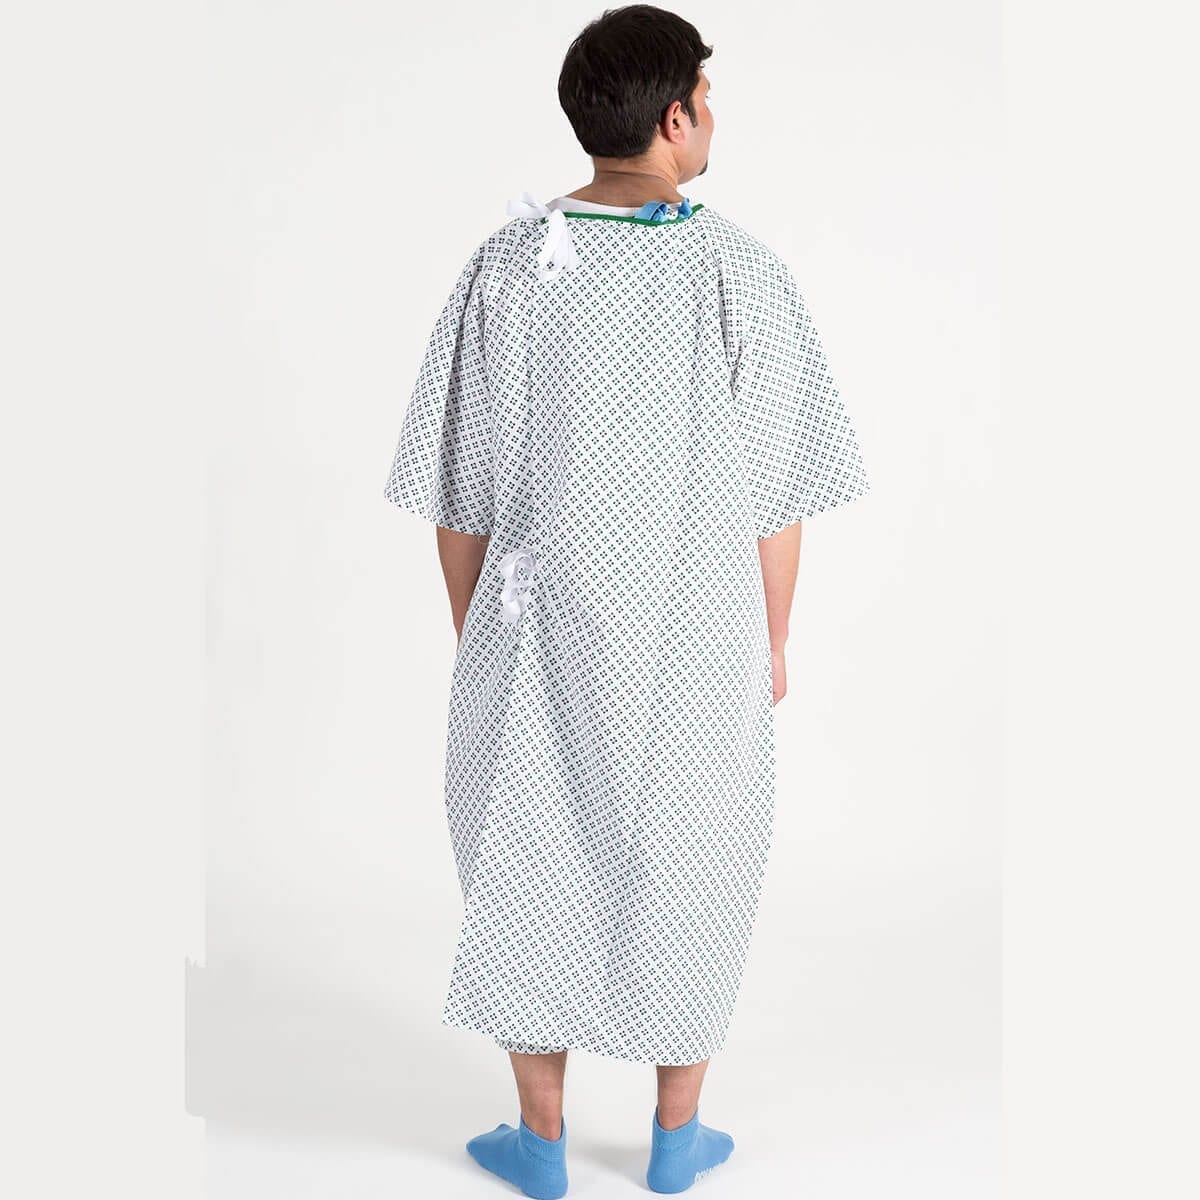 Hospital bariatric 4XL gown - rear view